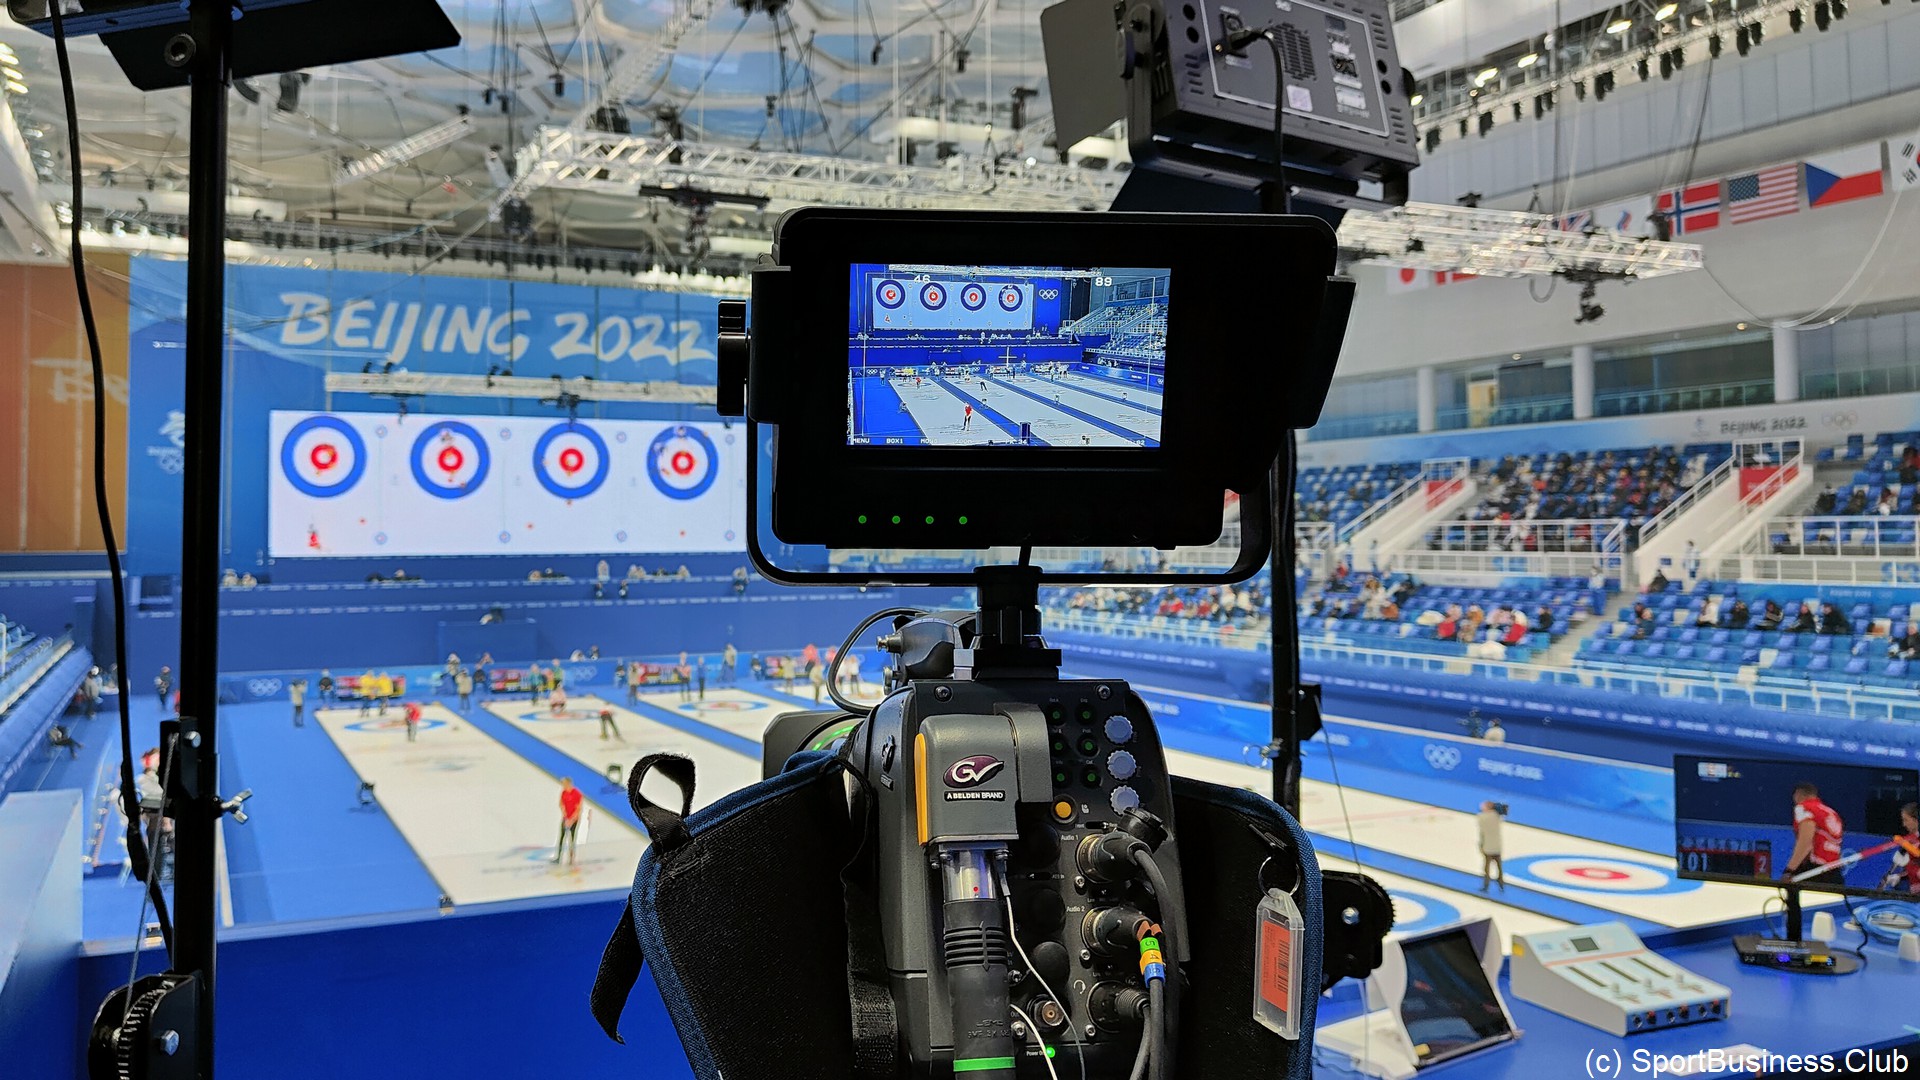 Pekin Beijing 2022 (23) Curling Camera TV